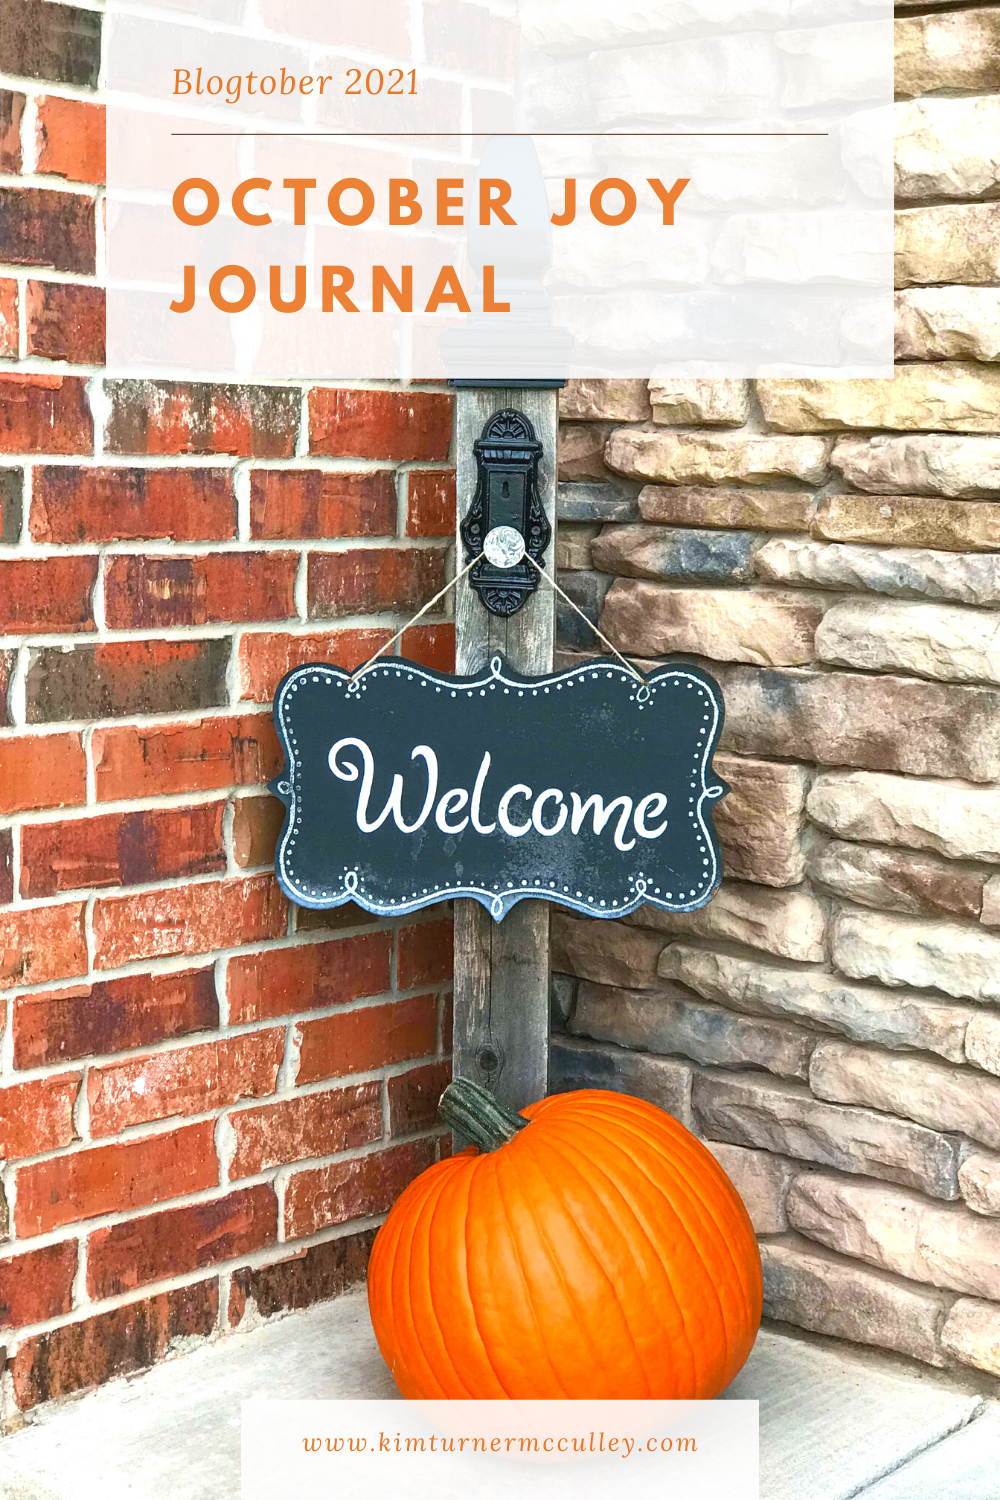 October Joy Journal | Blogtober 2021
KimTurnerMcCulley
Welcome sign, large orange pumpkin